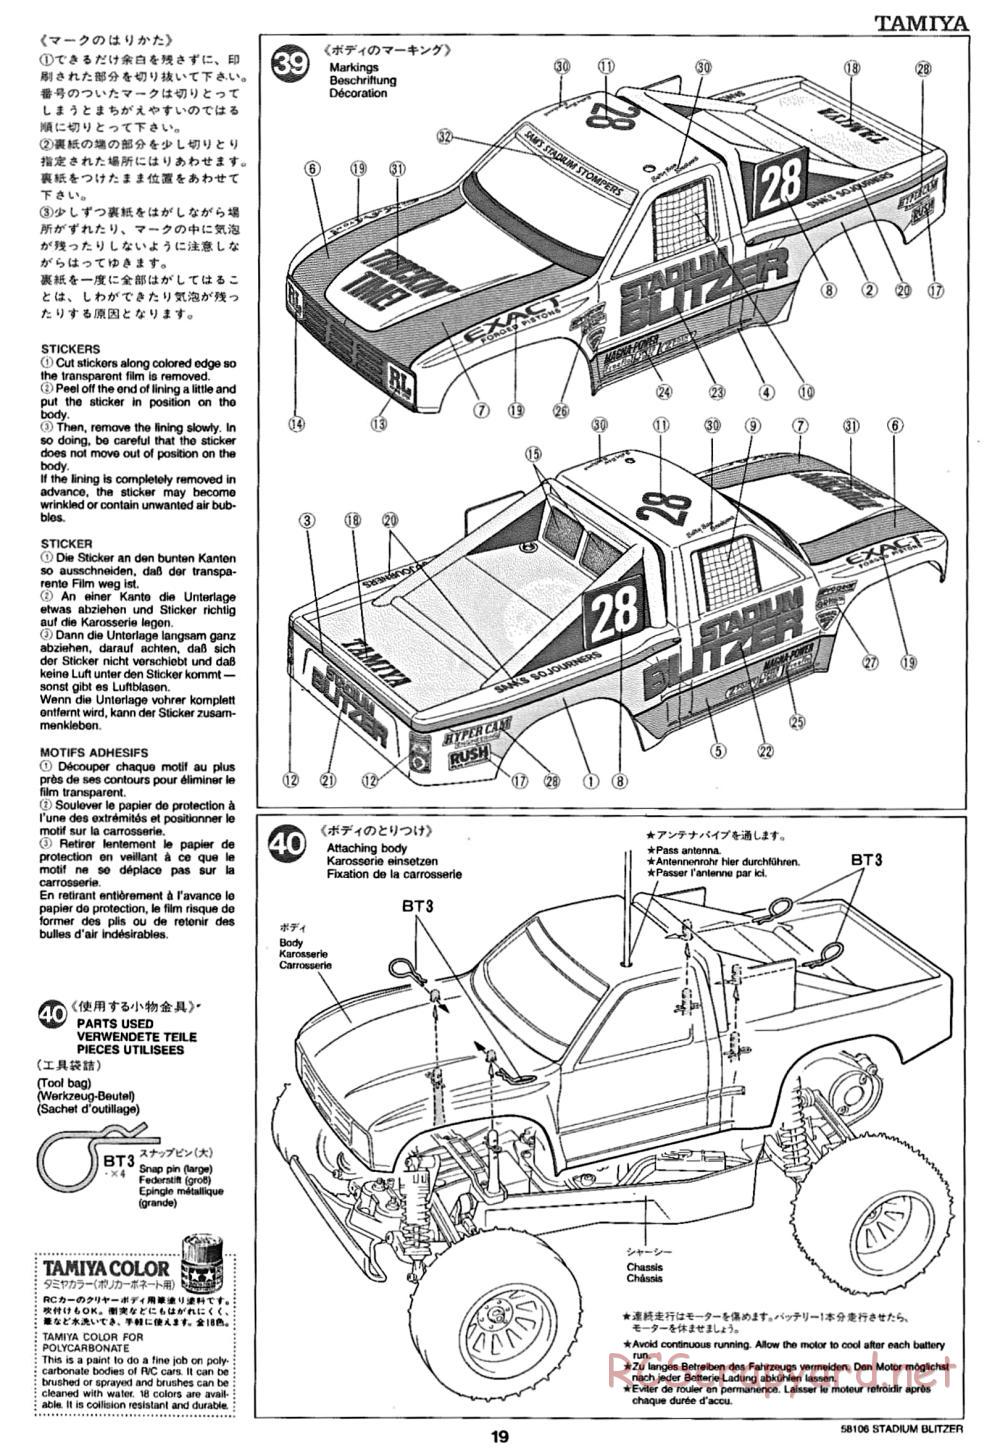 Tamiya - Stadium Blitzer Chassis - Manual - Page 19